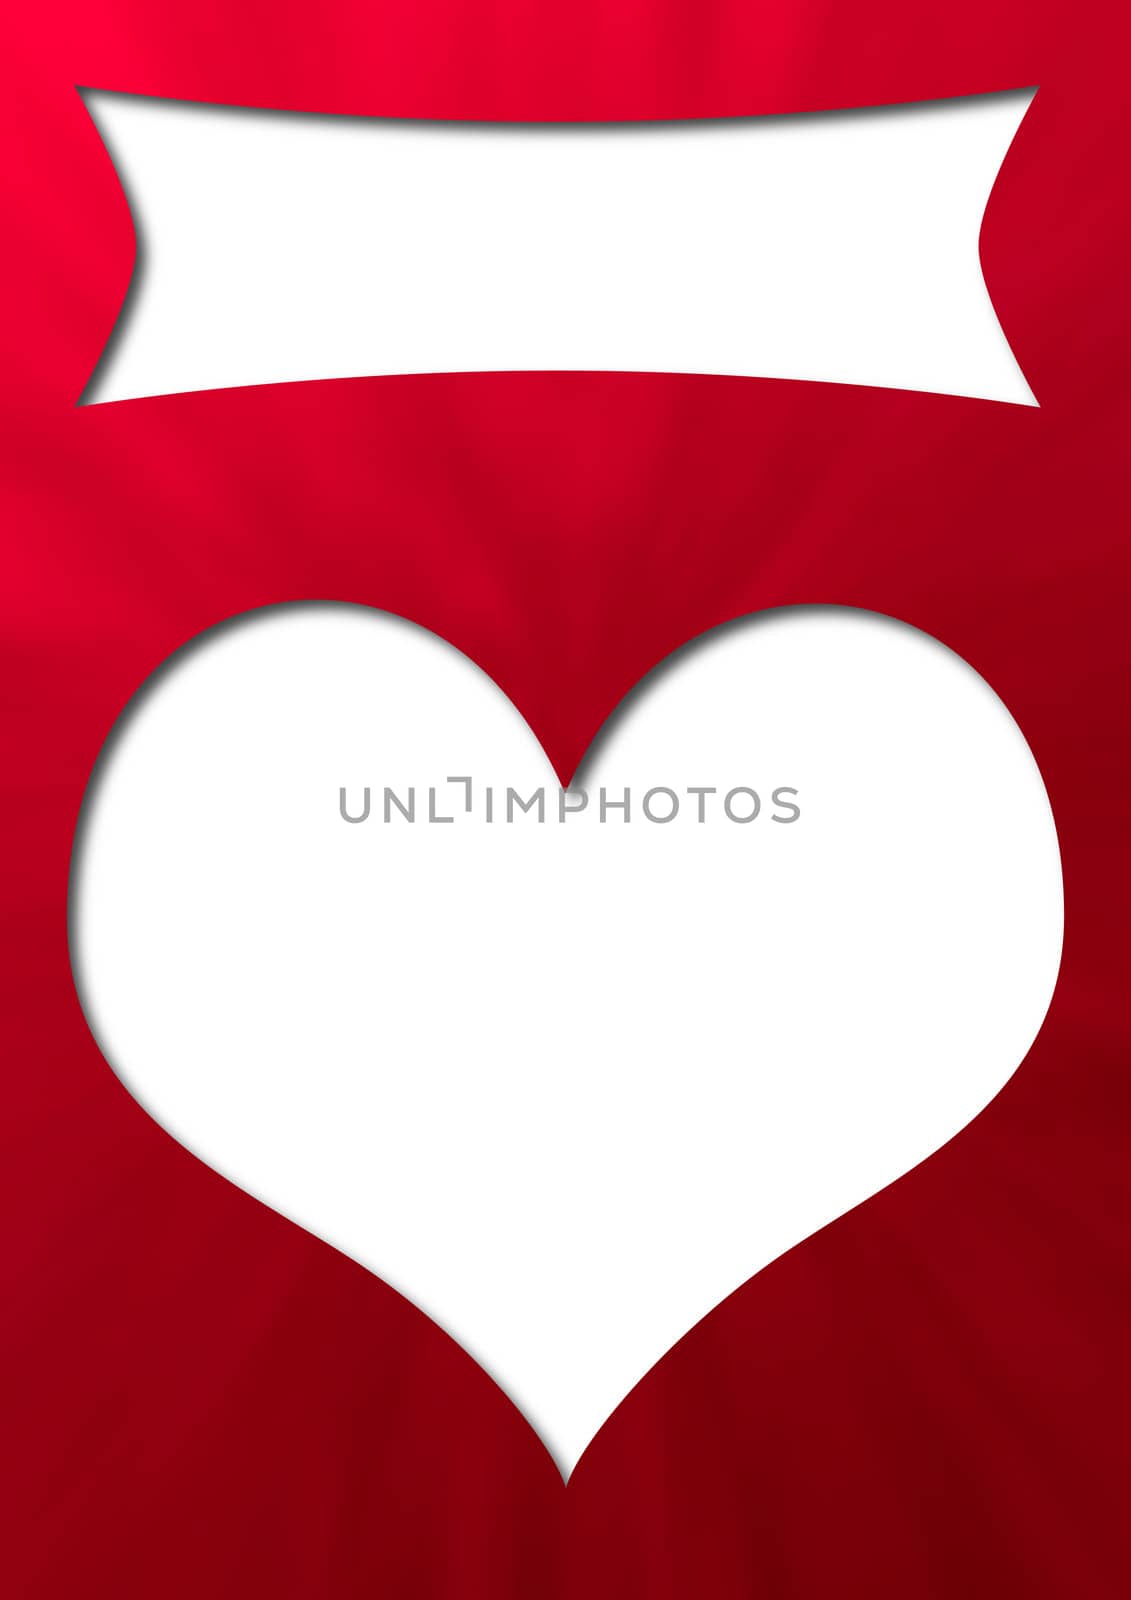 background_frame_heart - For filling